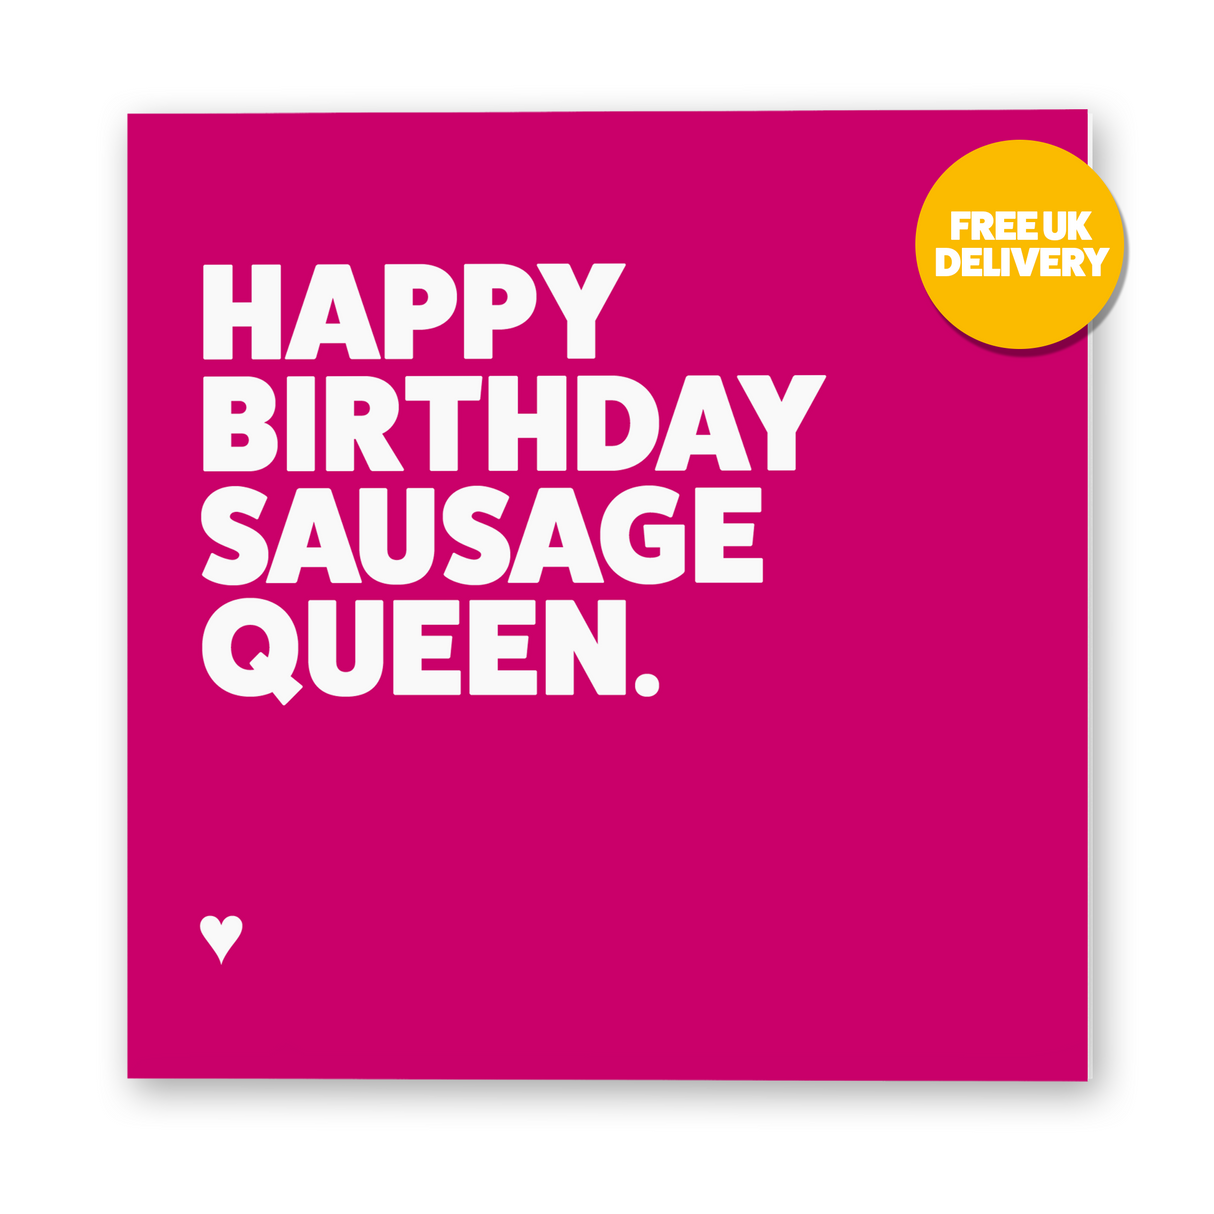 SALE Sausage Queen Rude Birthday Card